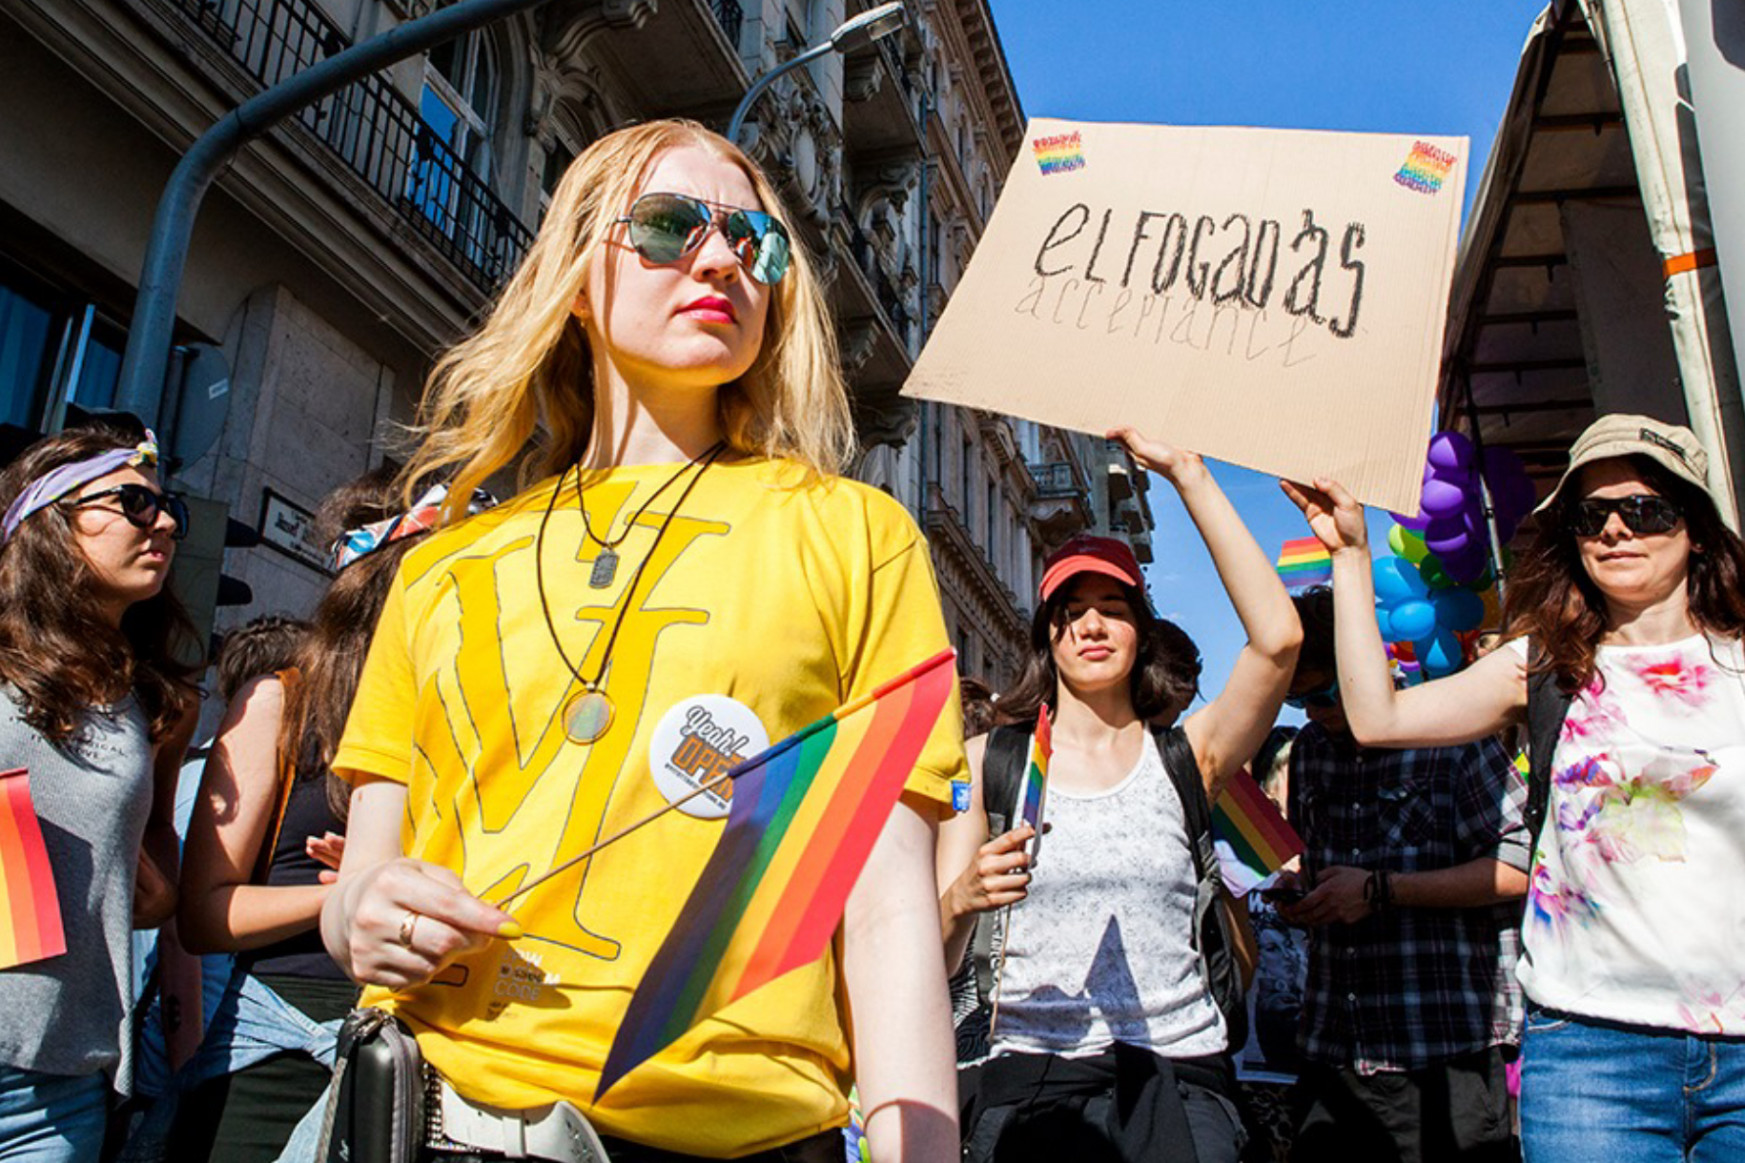 Július 24-én lesz a Budapest Pride